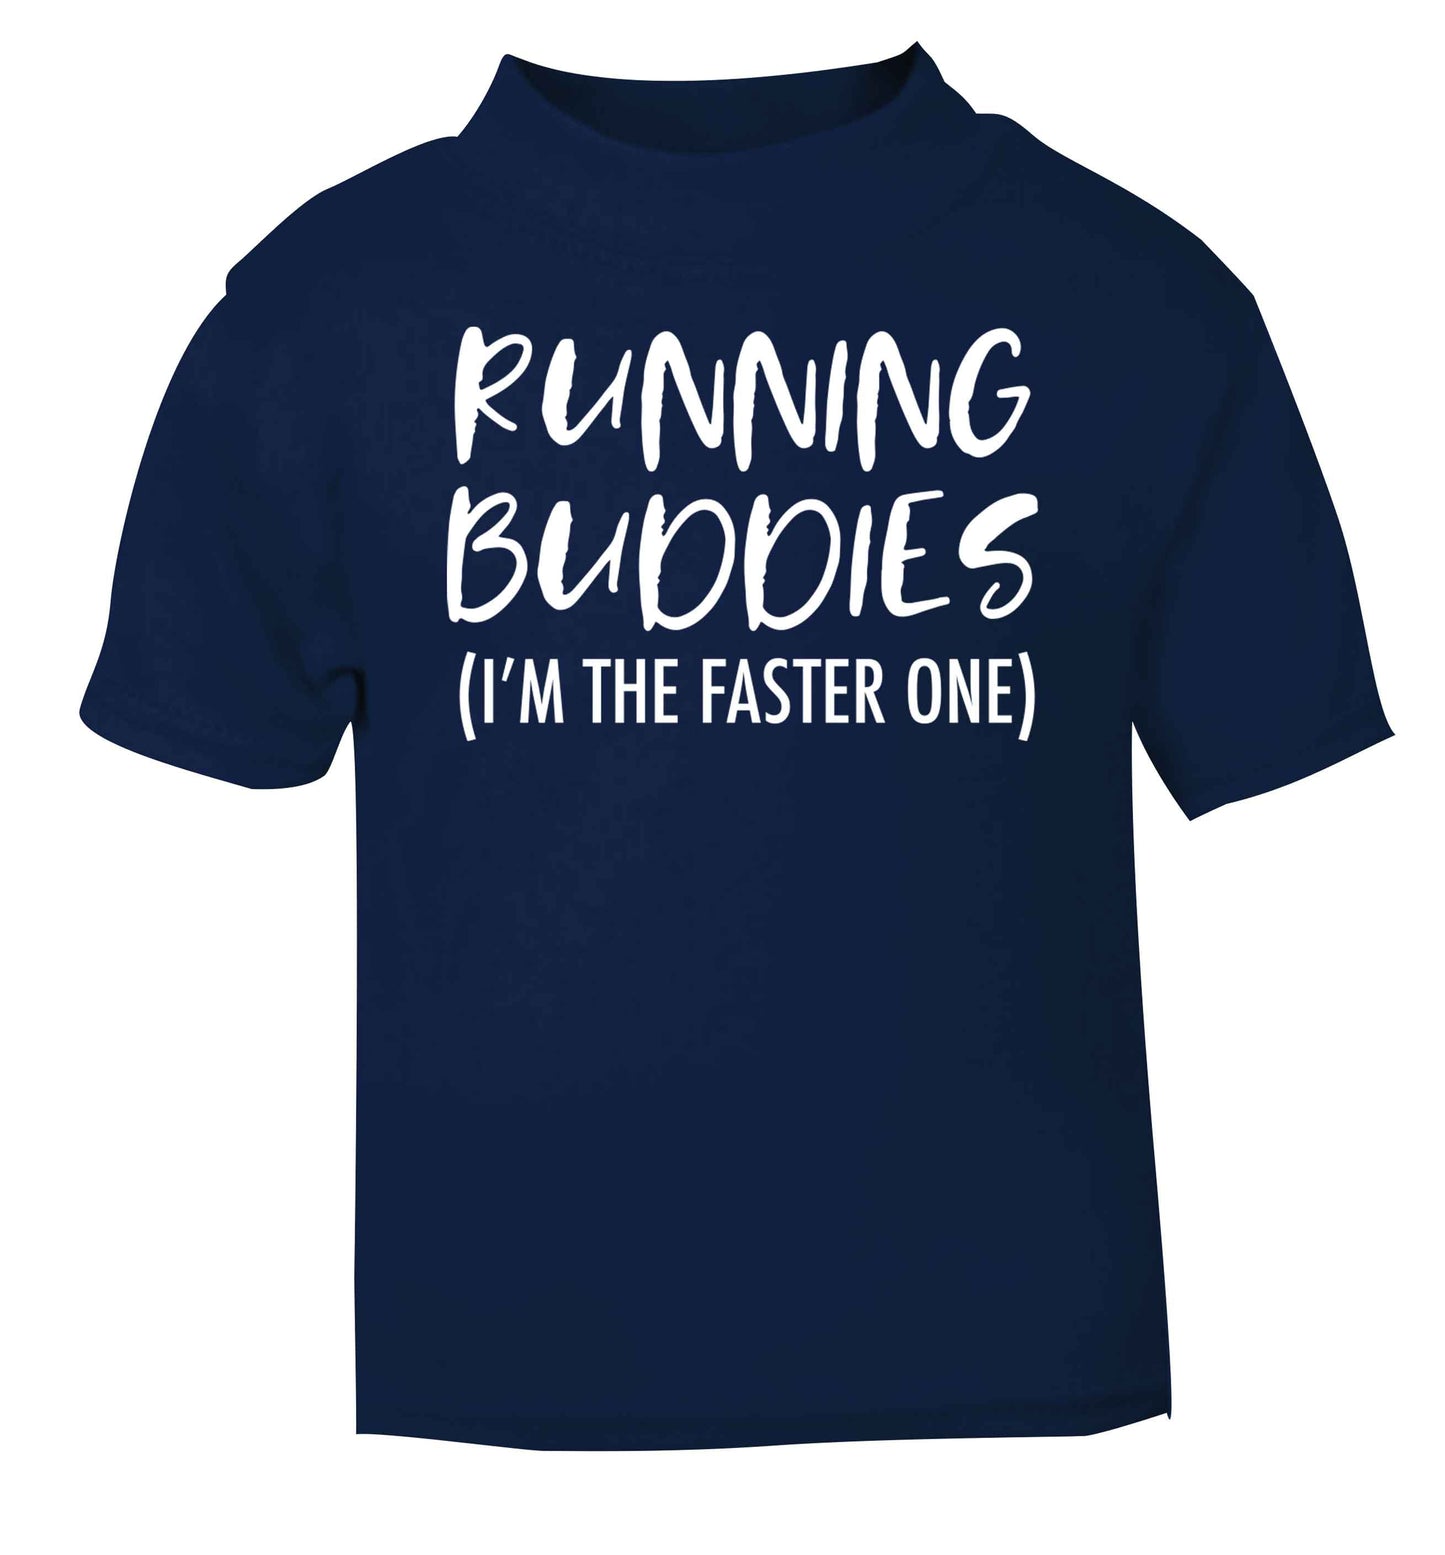 Running buddies (I'm the faster one) navy baby toddler Tshirt 2 Years